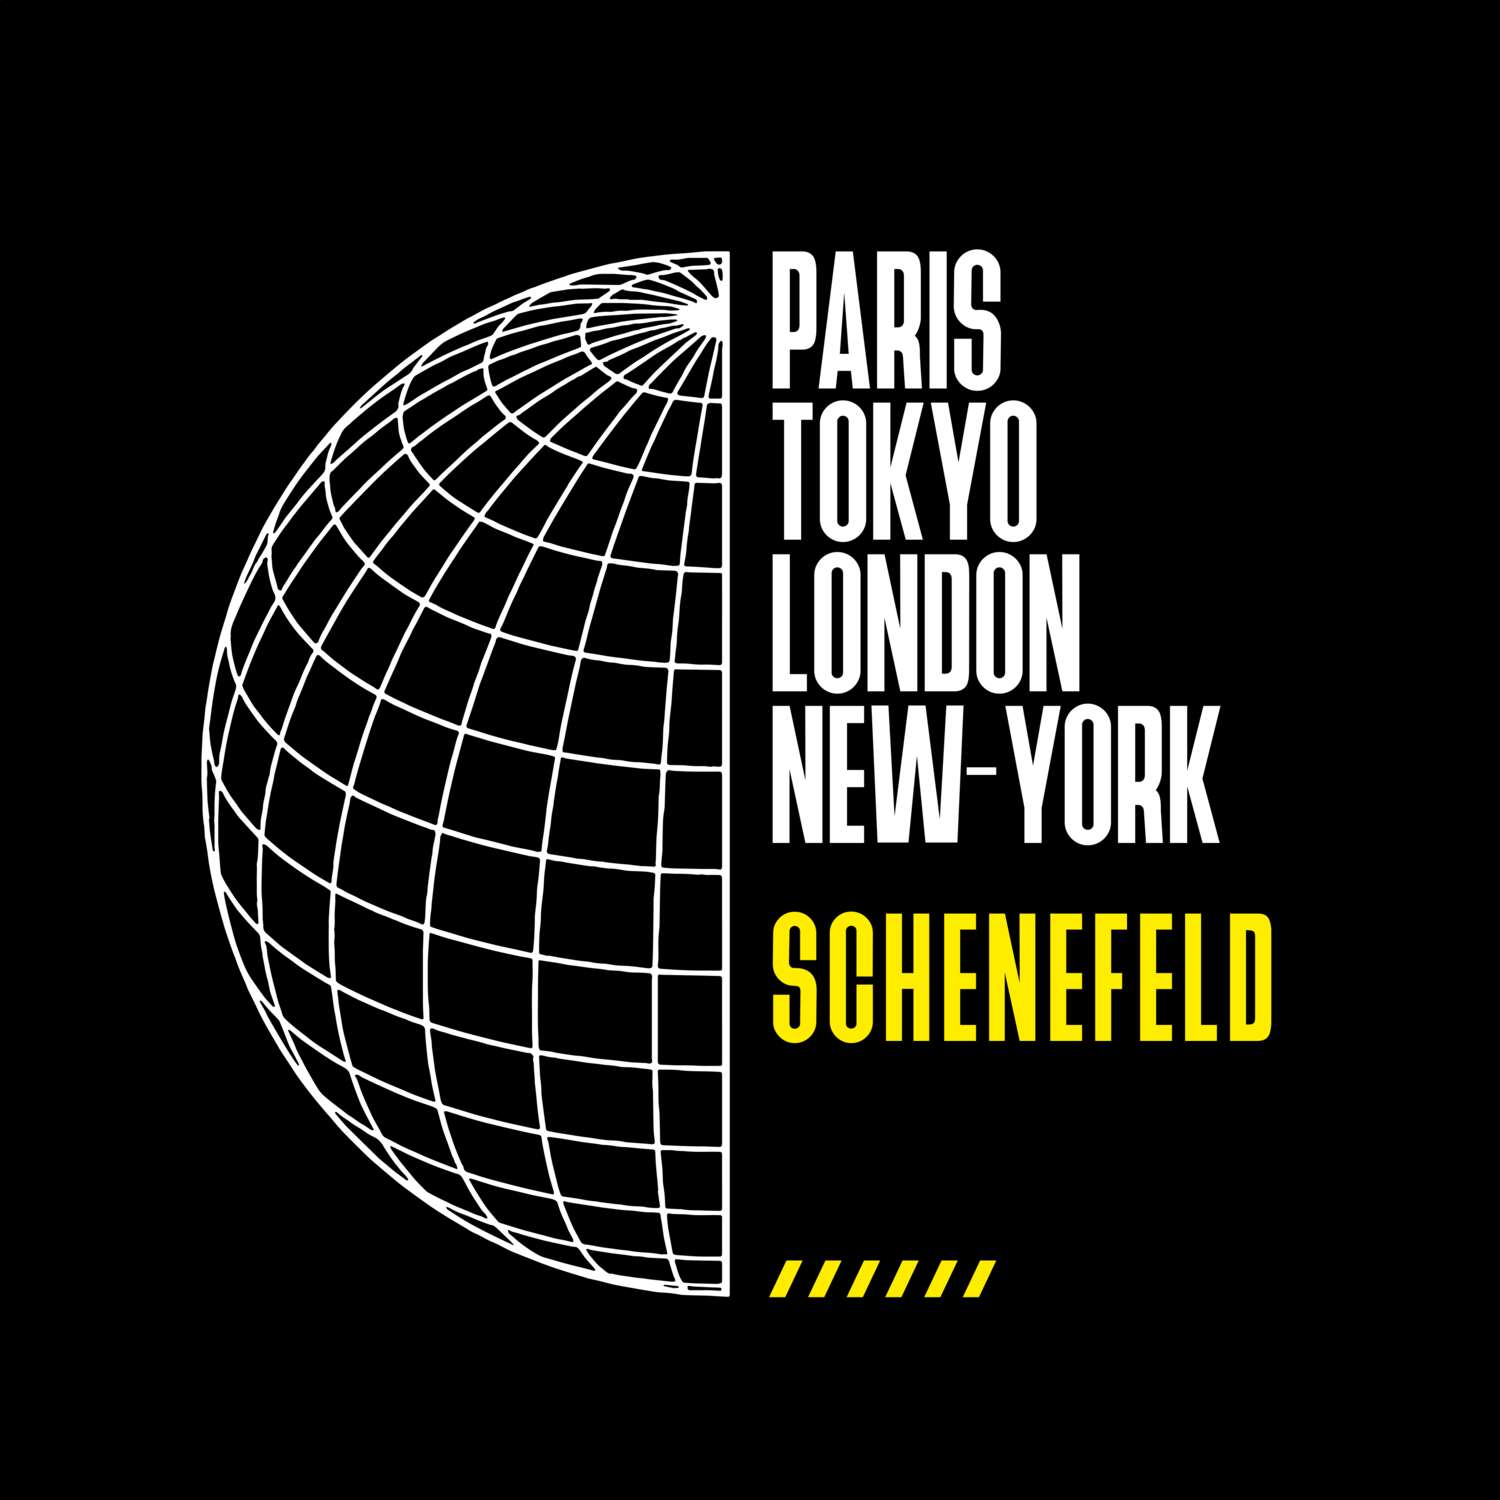 Schenefeld T-Shirt »Paris Tokyo London«